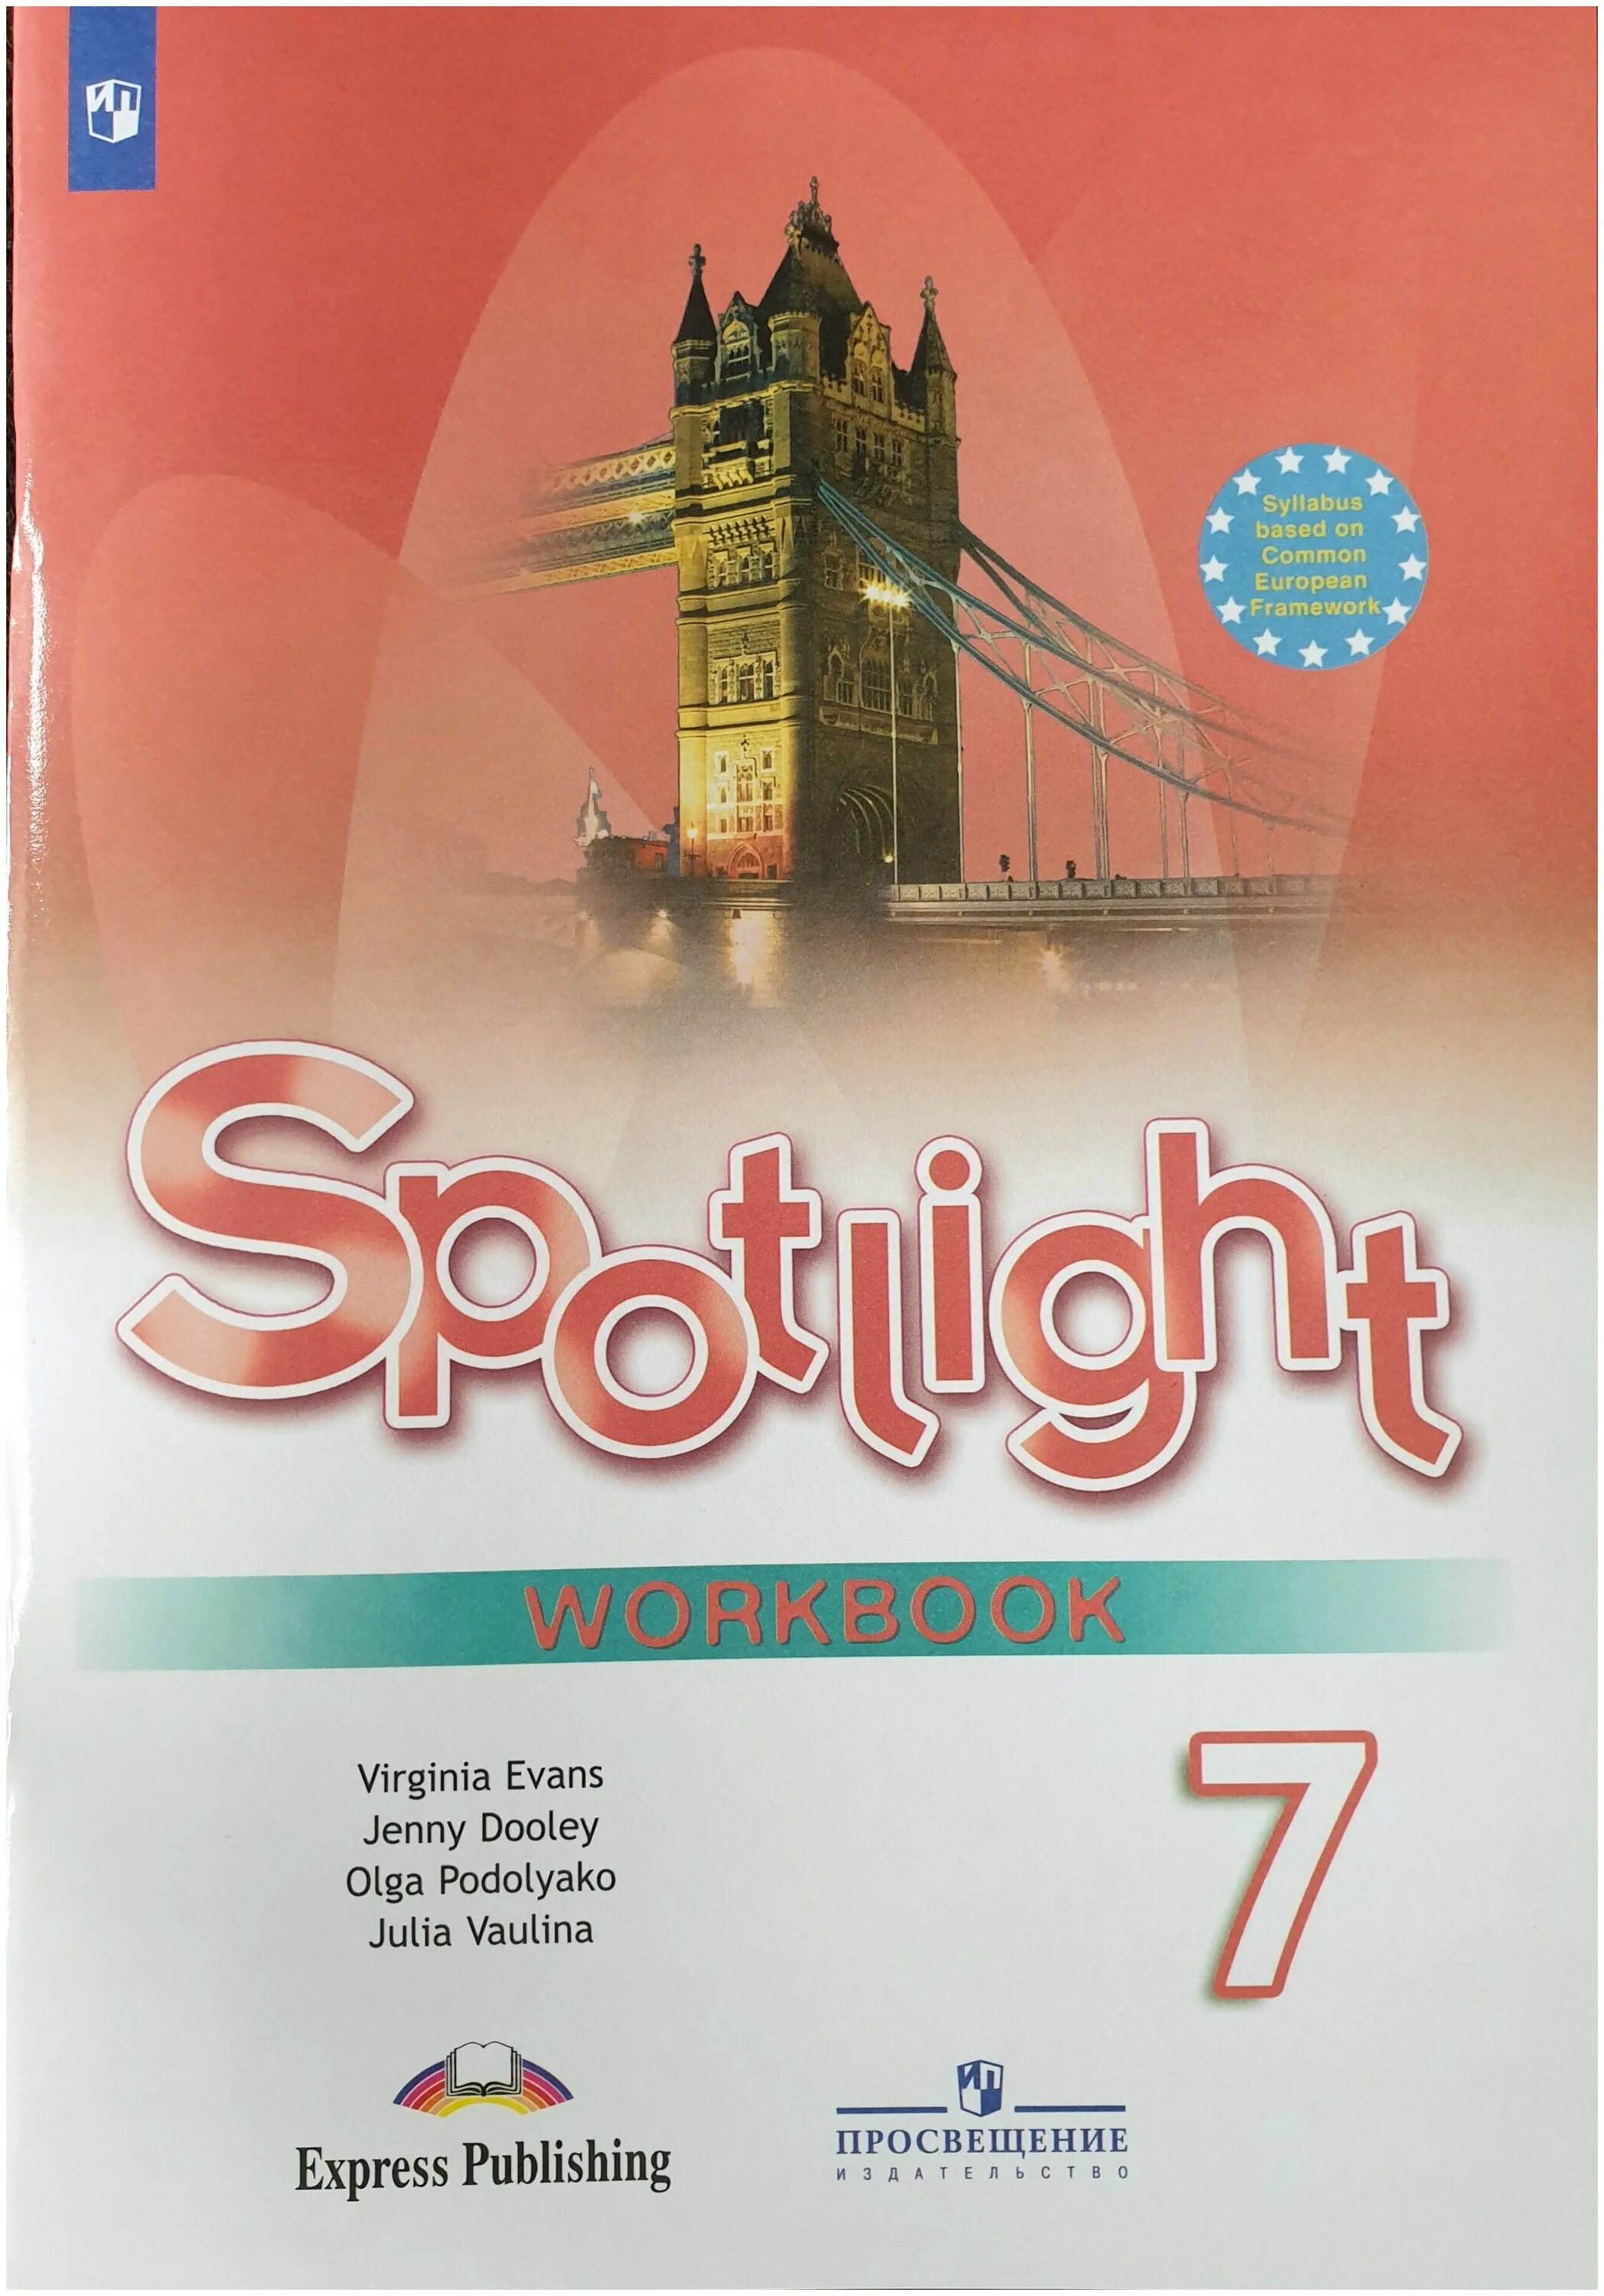 Spotlight 7 5 d. Workbook Spotlight 5 класс ваулина. Spotlight 5 Workbook английский язык Эванс. Англ 5 класс рабочая тетрадь Spotlight. Тетради для английского языка 5 класс спотлайт.